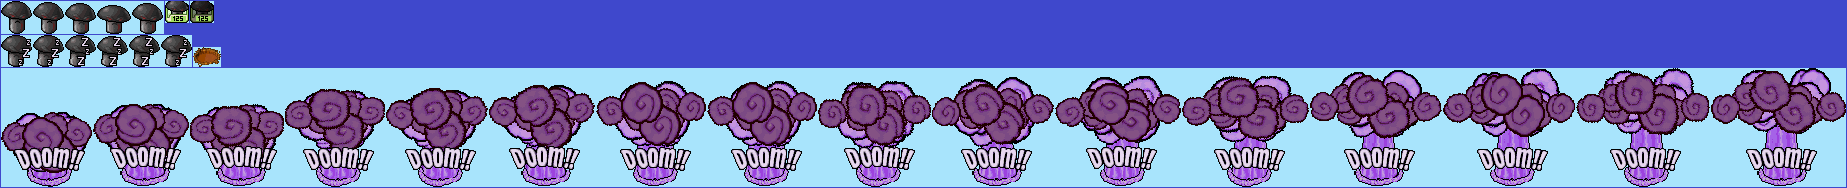 Plants vs. Zombies - Doom-Shroom